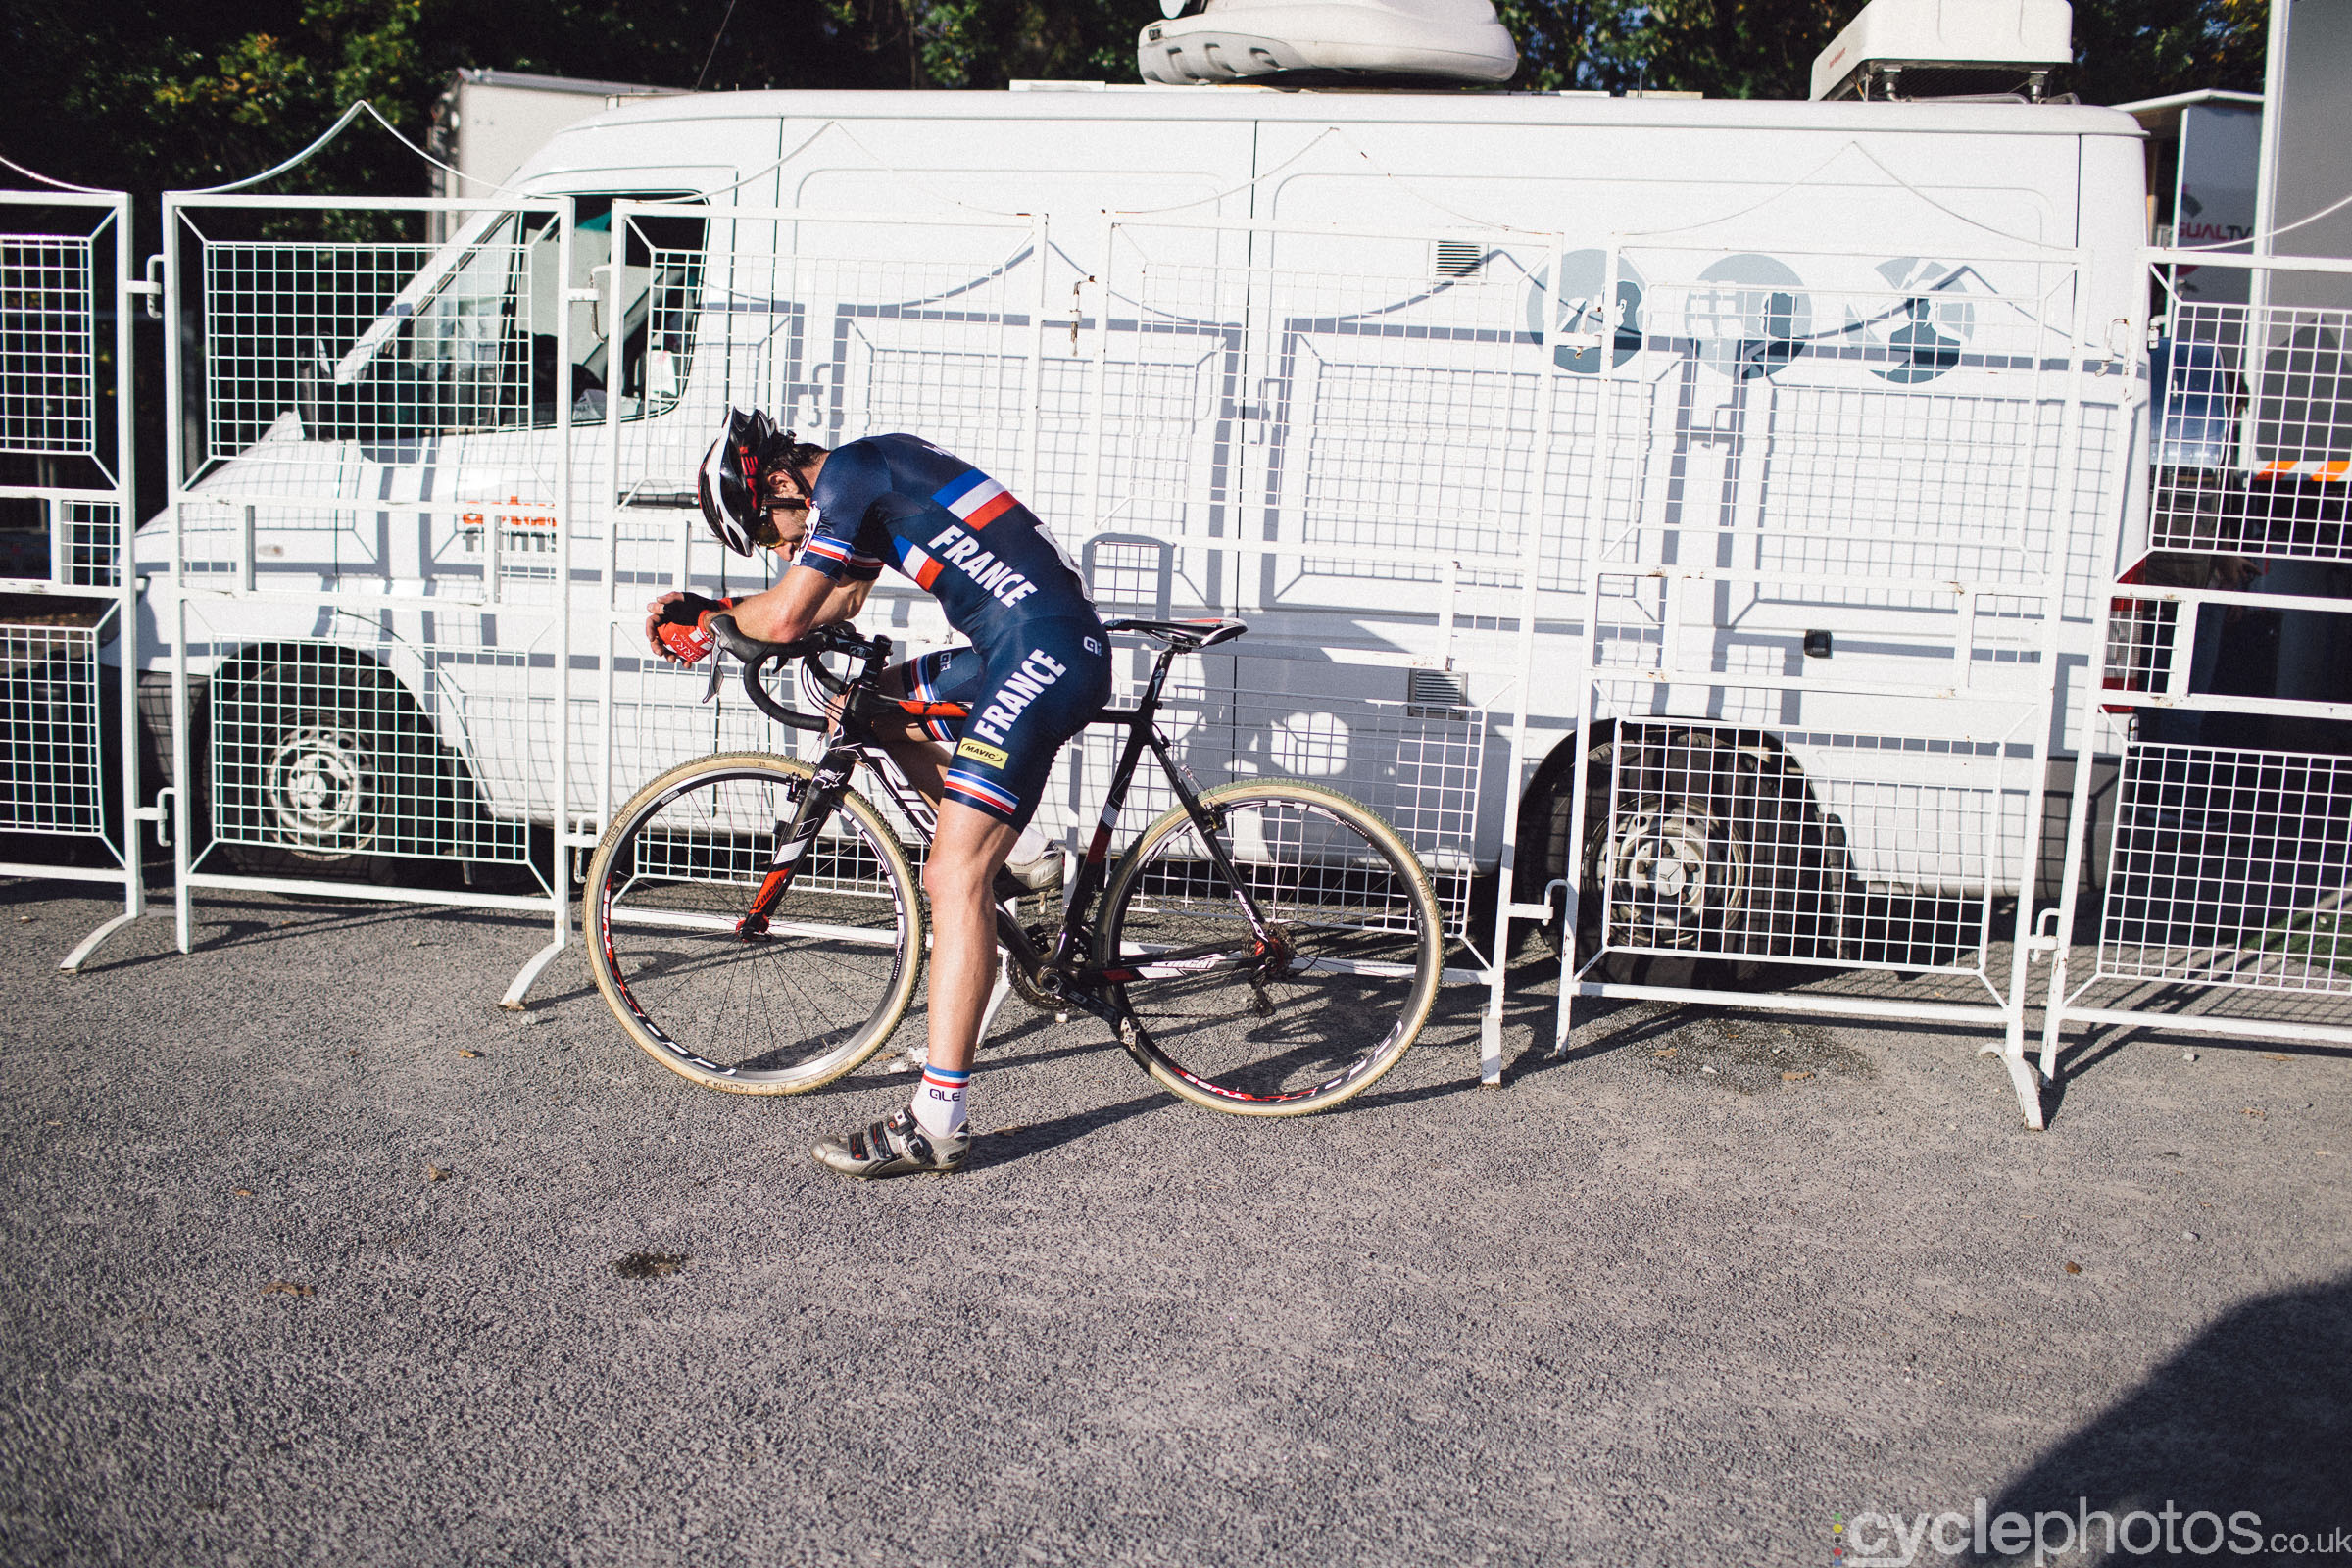 2016 UEC European Cyclocross Chamionships, Pontchatea, France